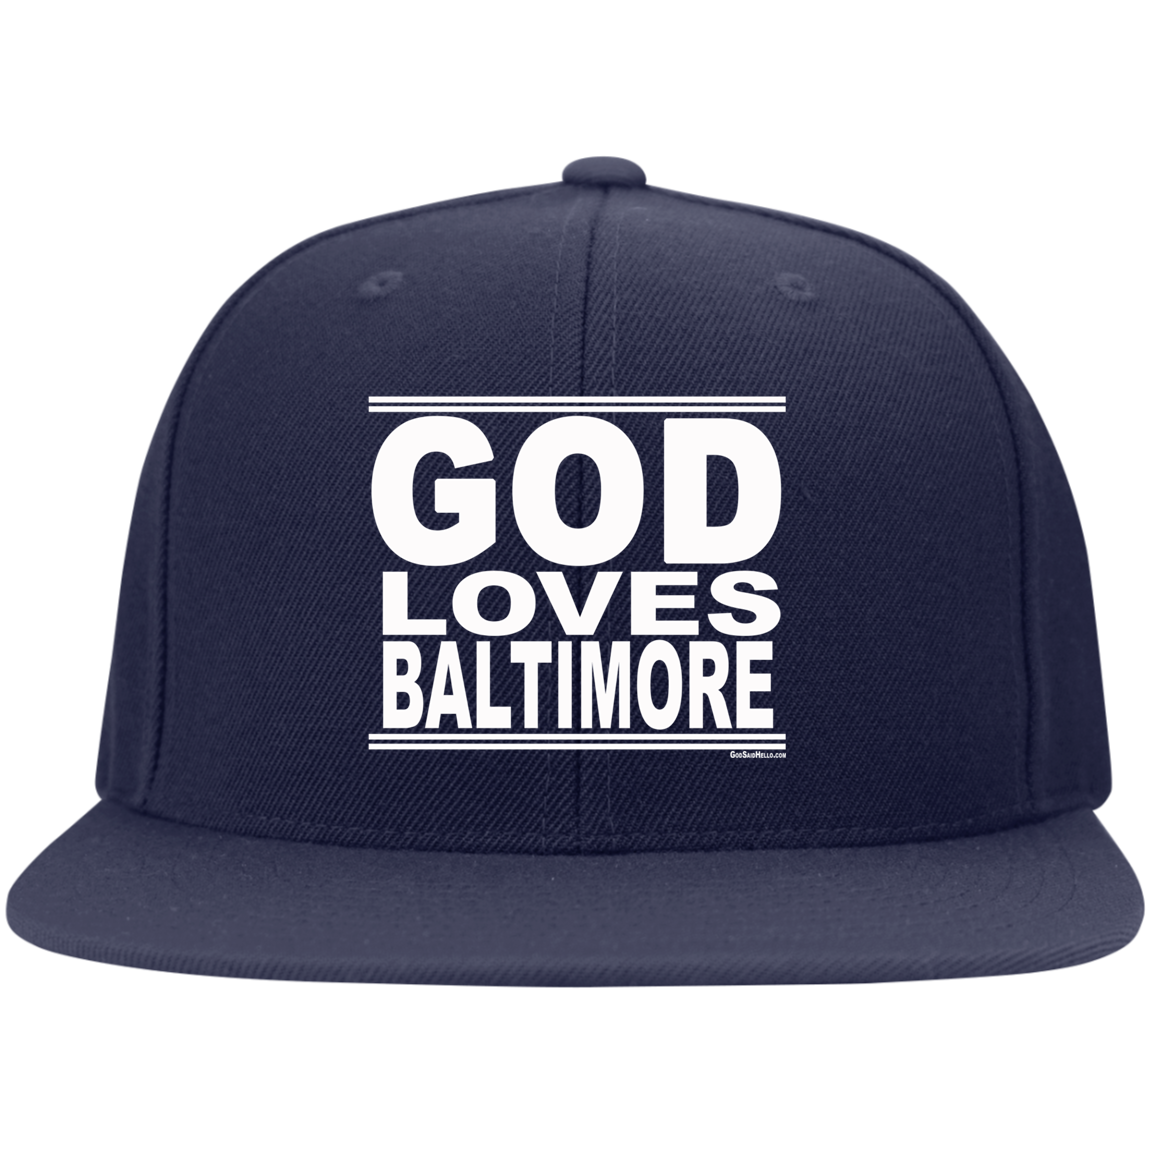 #GodLovesBaltimore - Snapback Hat